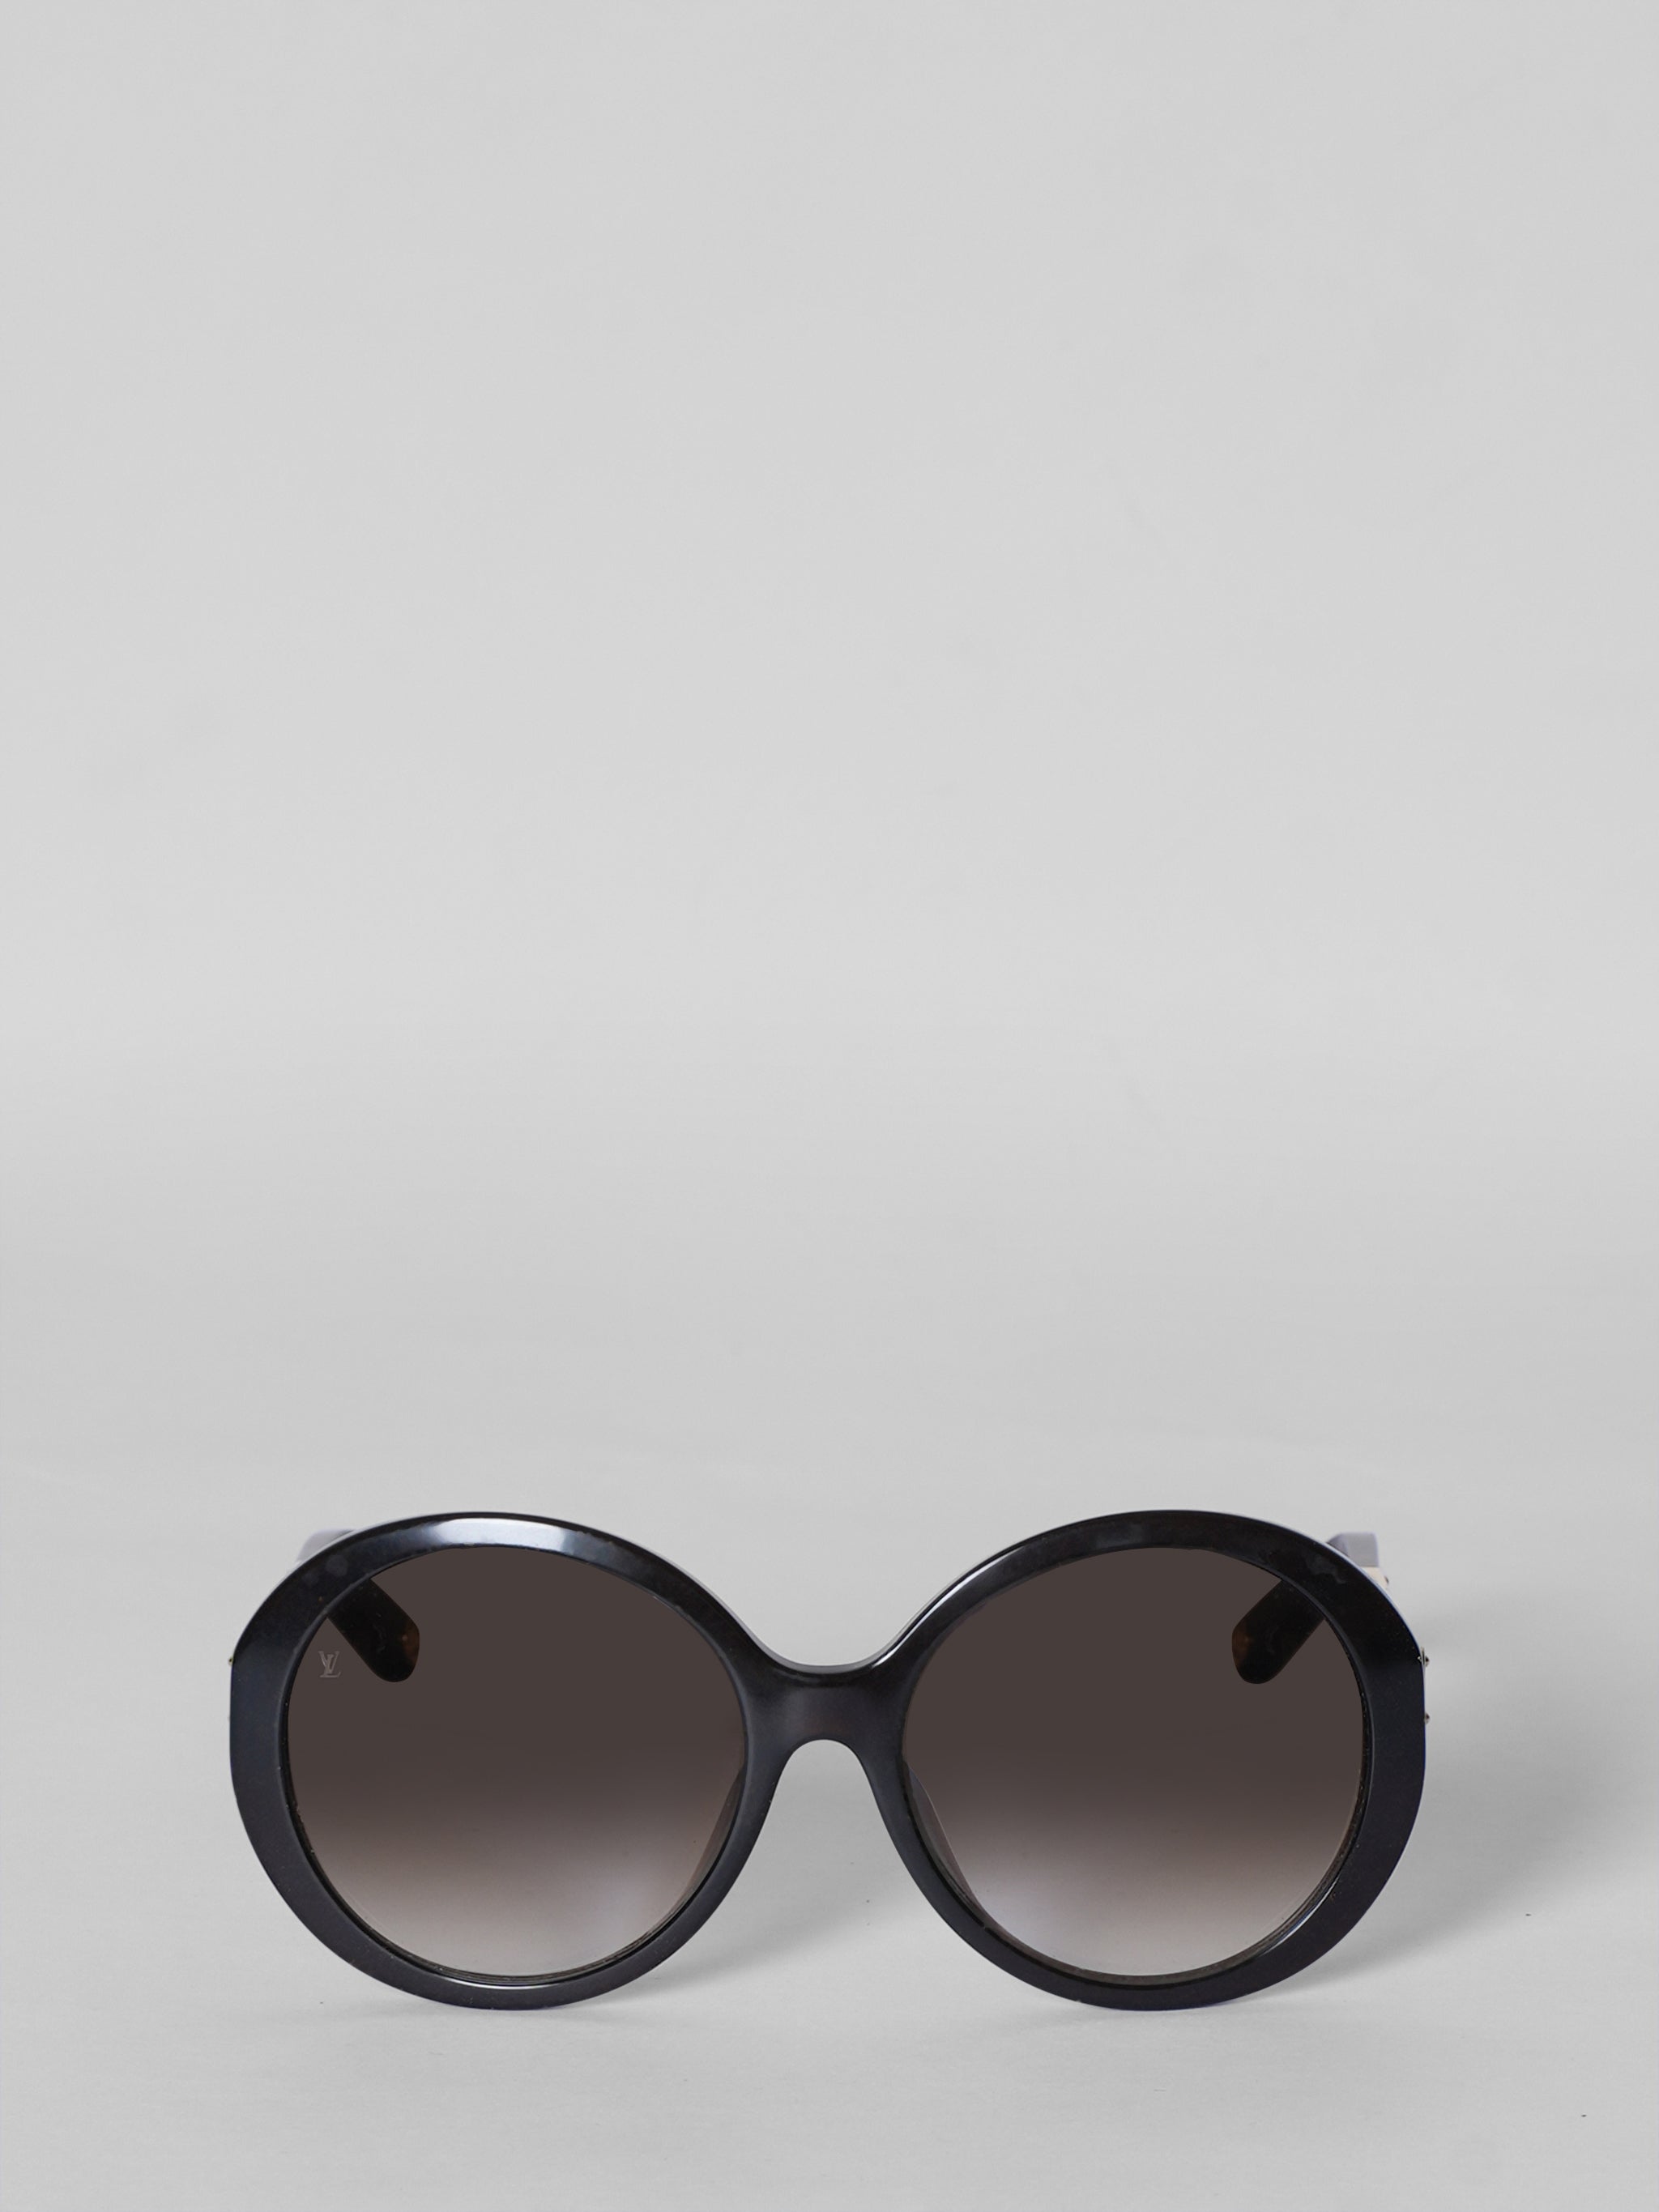 Louis Vuitton Brown Sunglasses